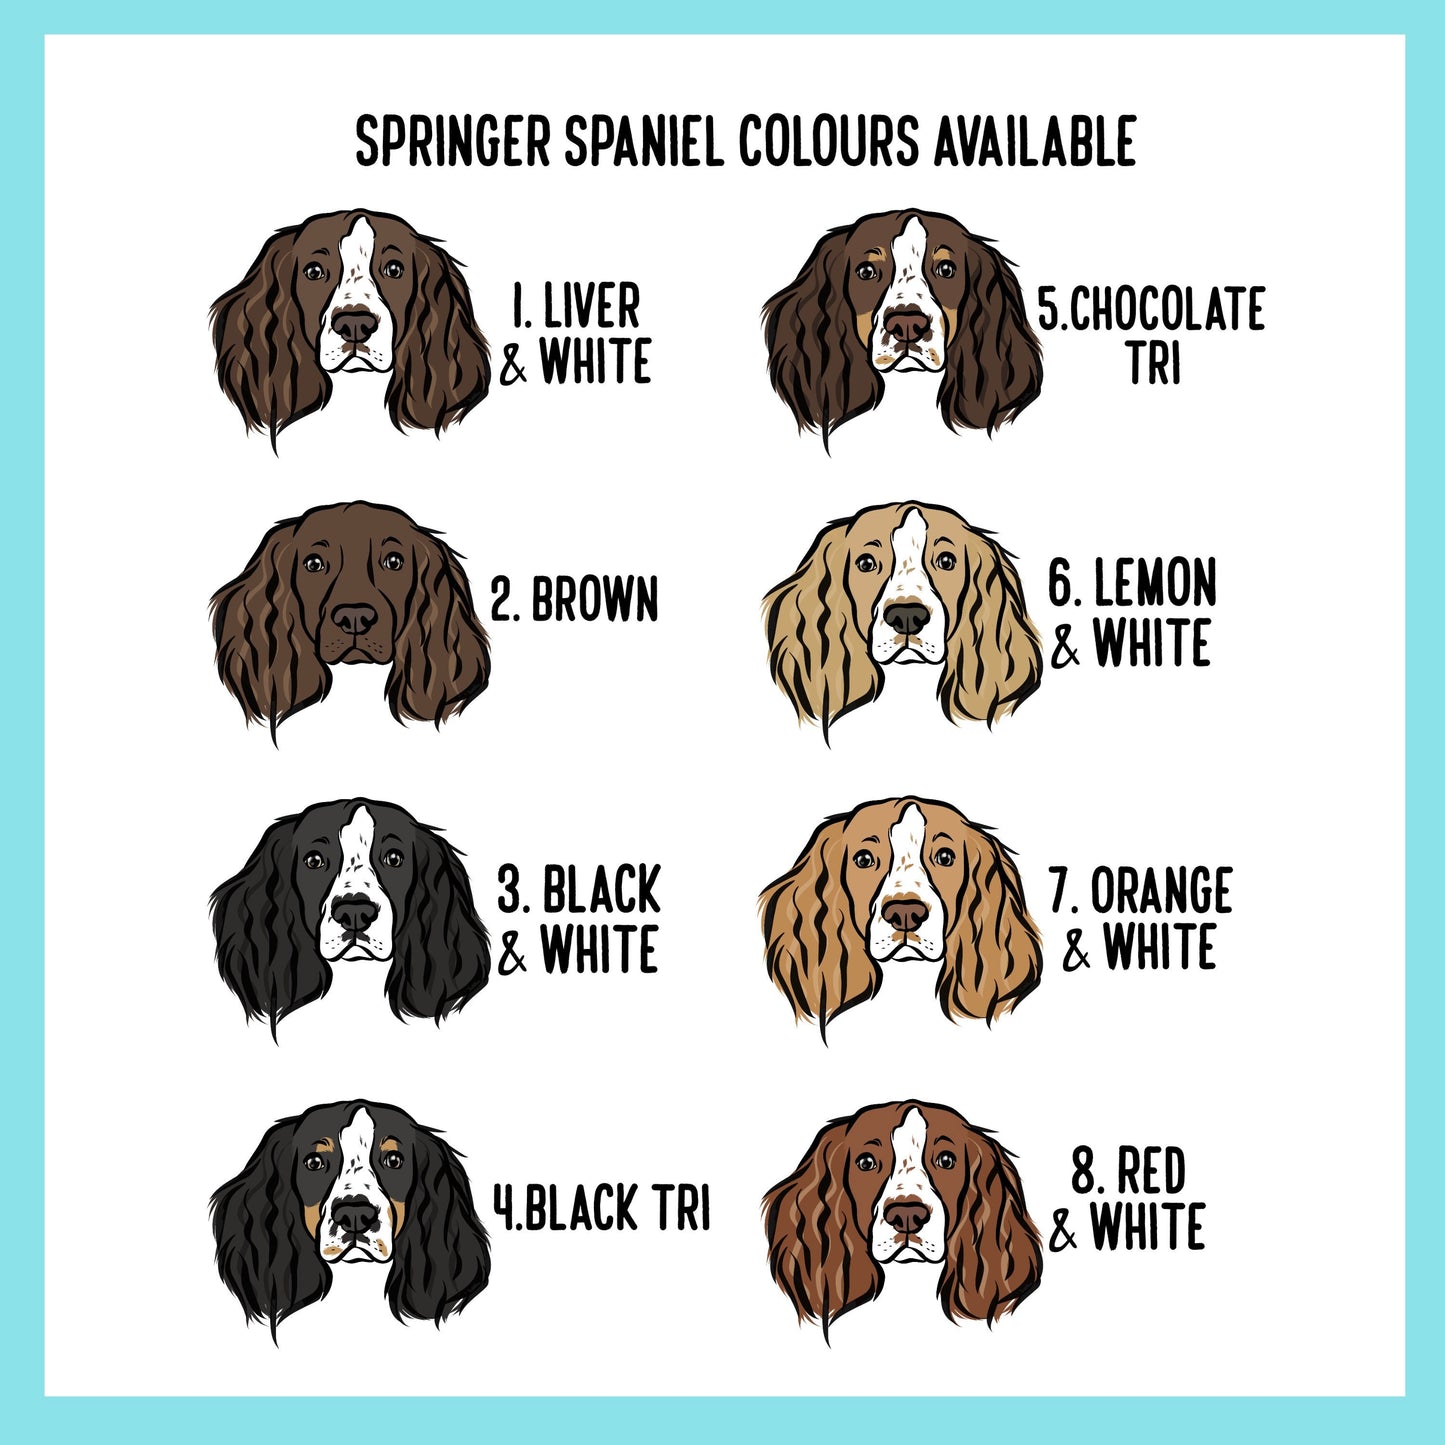 Springer Spaniel Dog Mug/ Personalised Springer Spaniel Coffee Cup/ Dog Breed Face Mug/ Spaniel Dog Quotes Gift/ Pet Memorial Mug/ Pet Loss